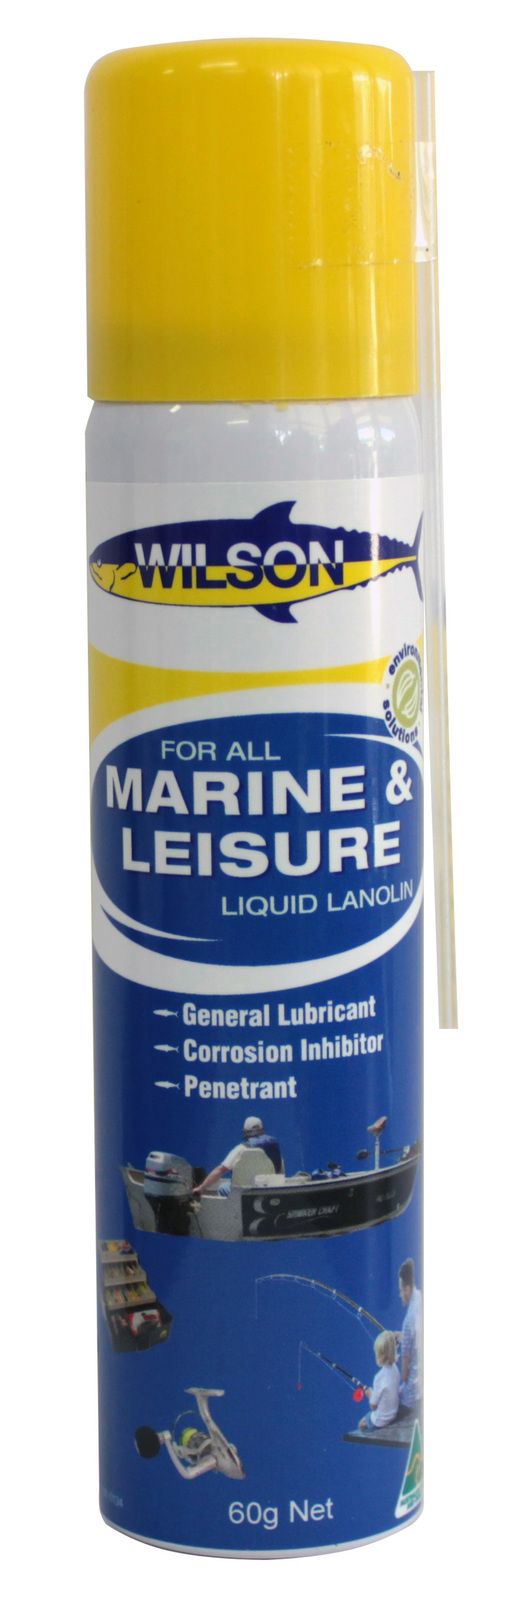 Wilson Marine Leisure Lube